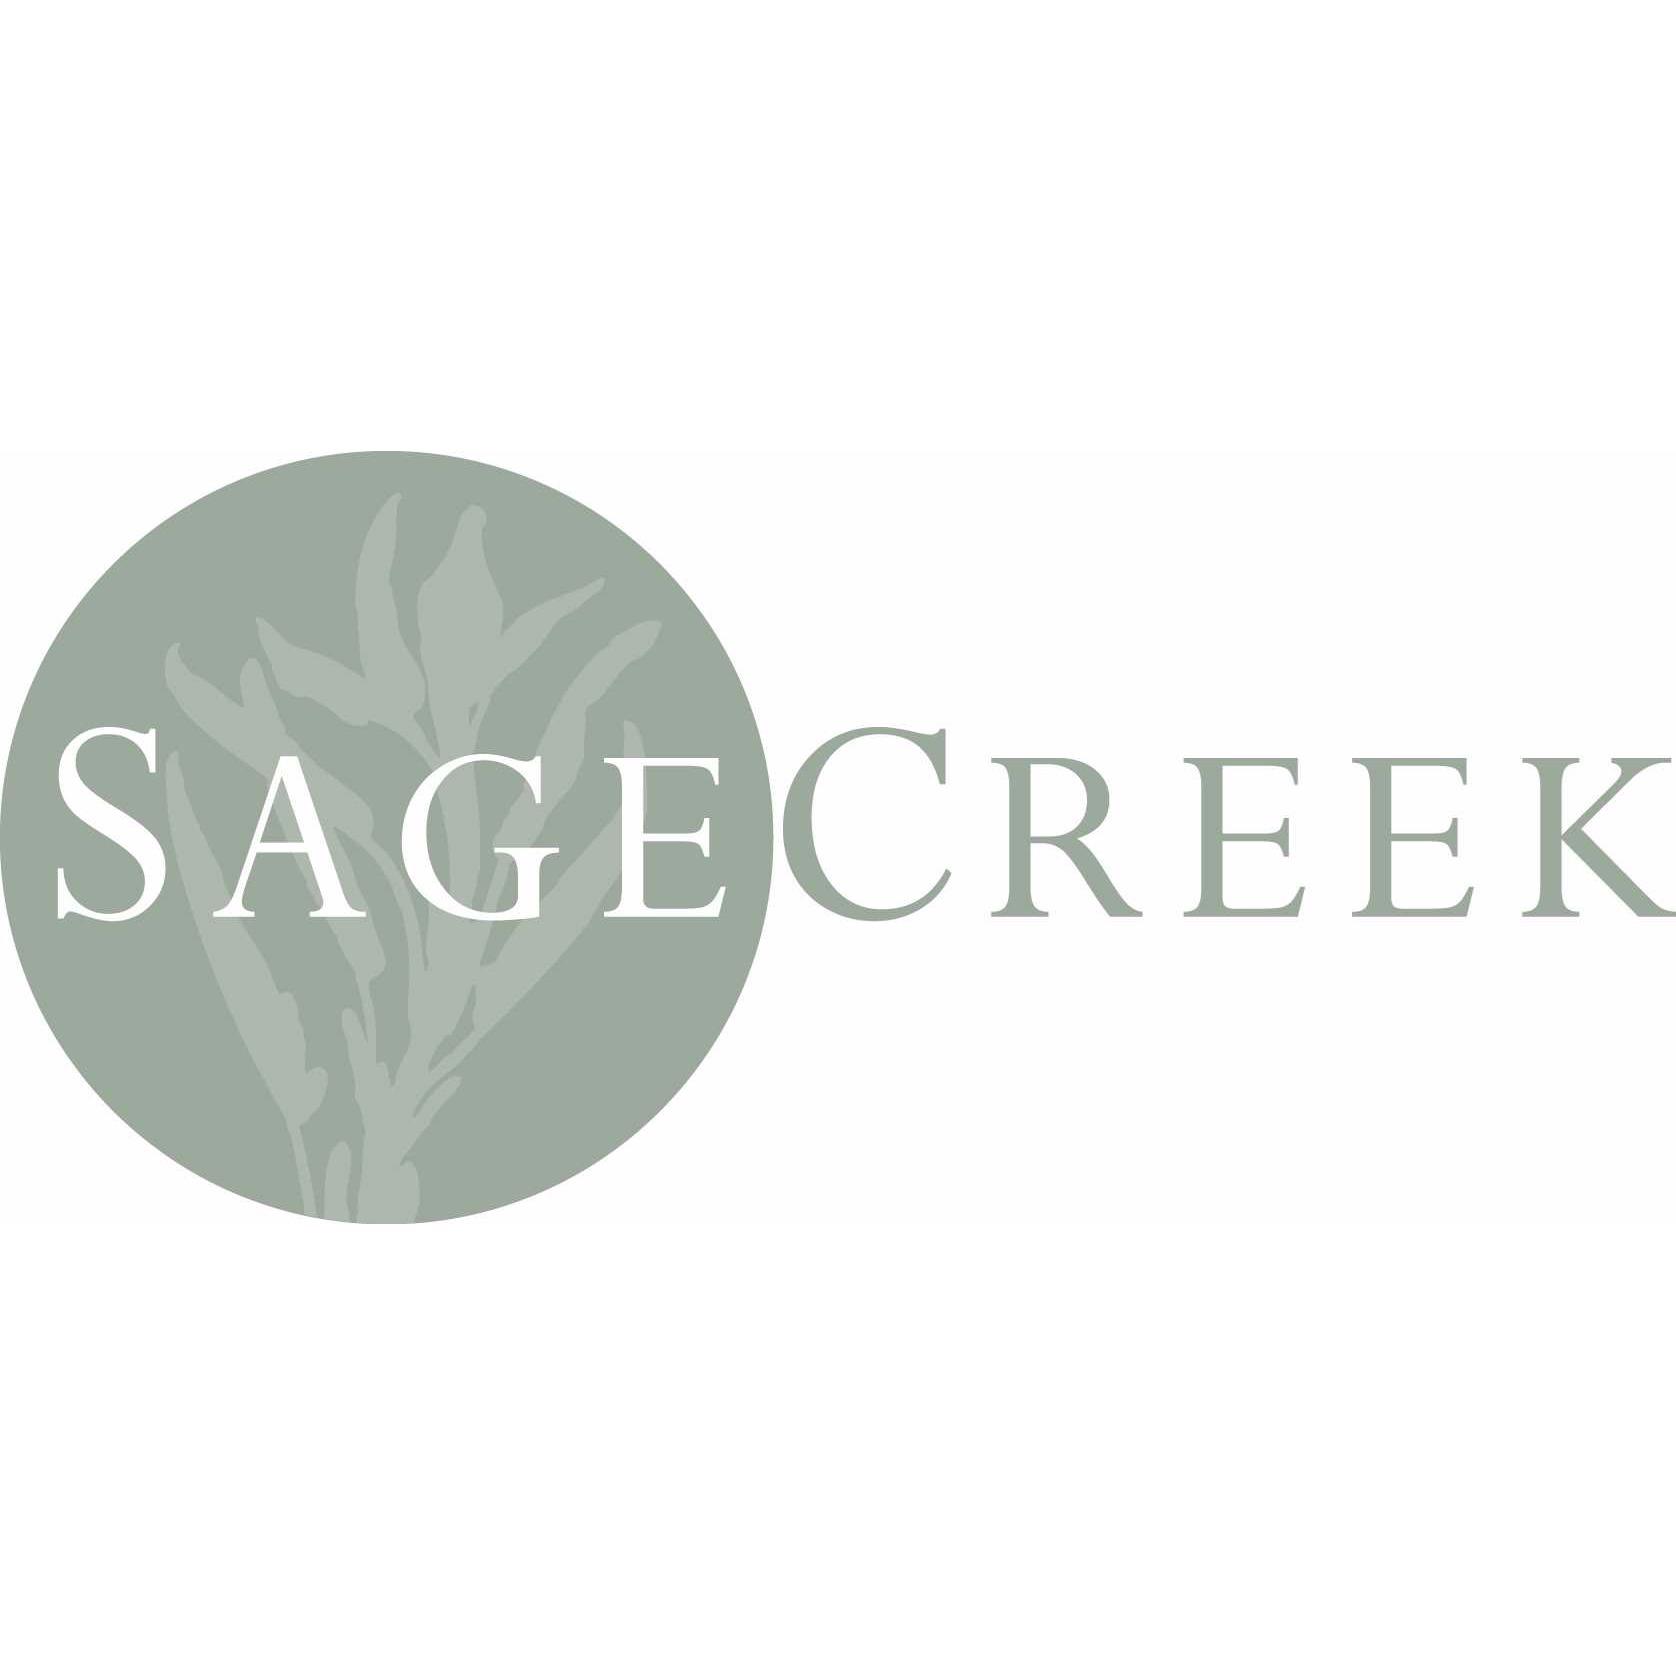 Sage Creek - Simi Valley, CA 93063 - (805)500-2873 | ShowMeLocal.com